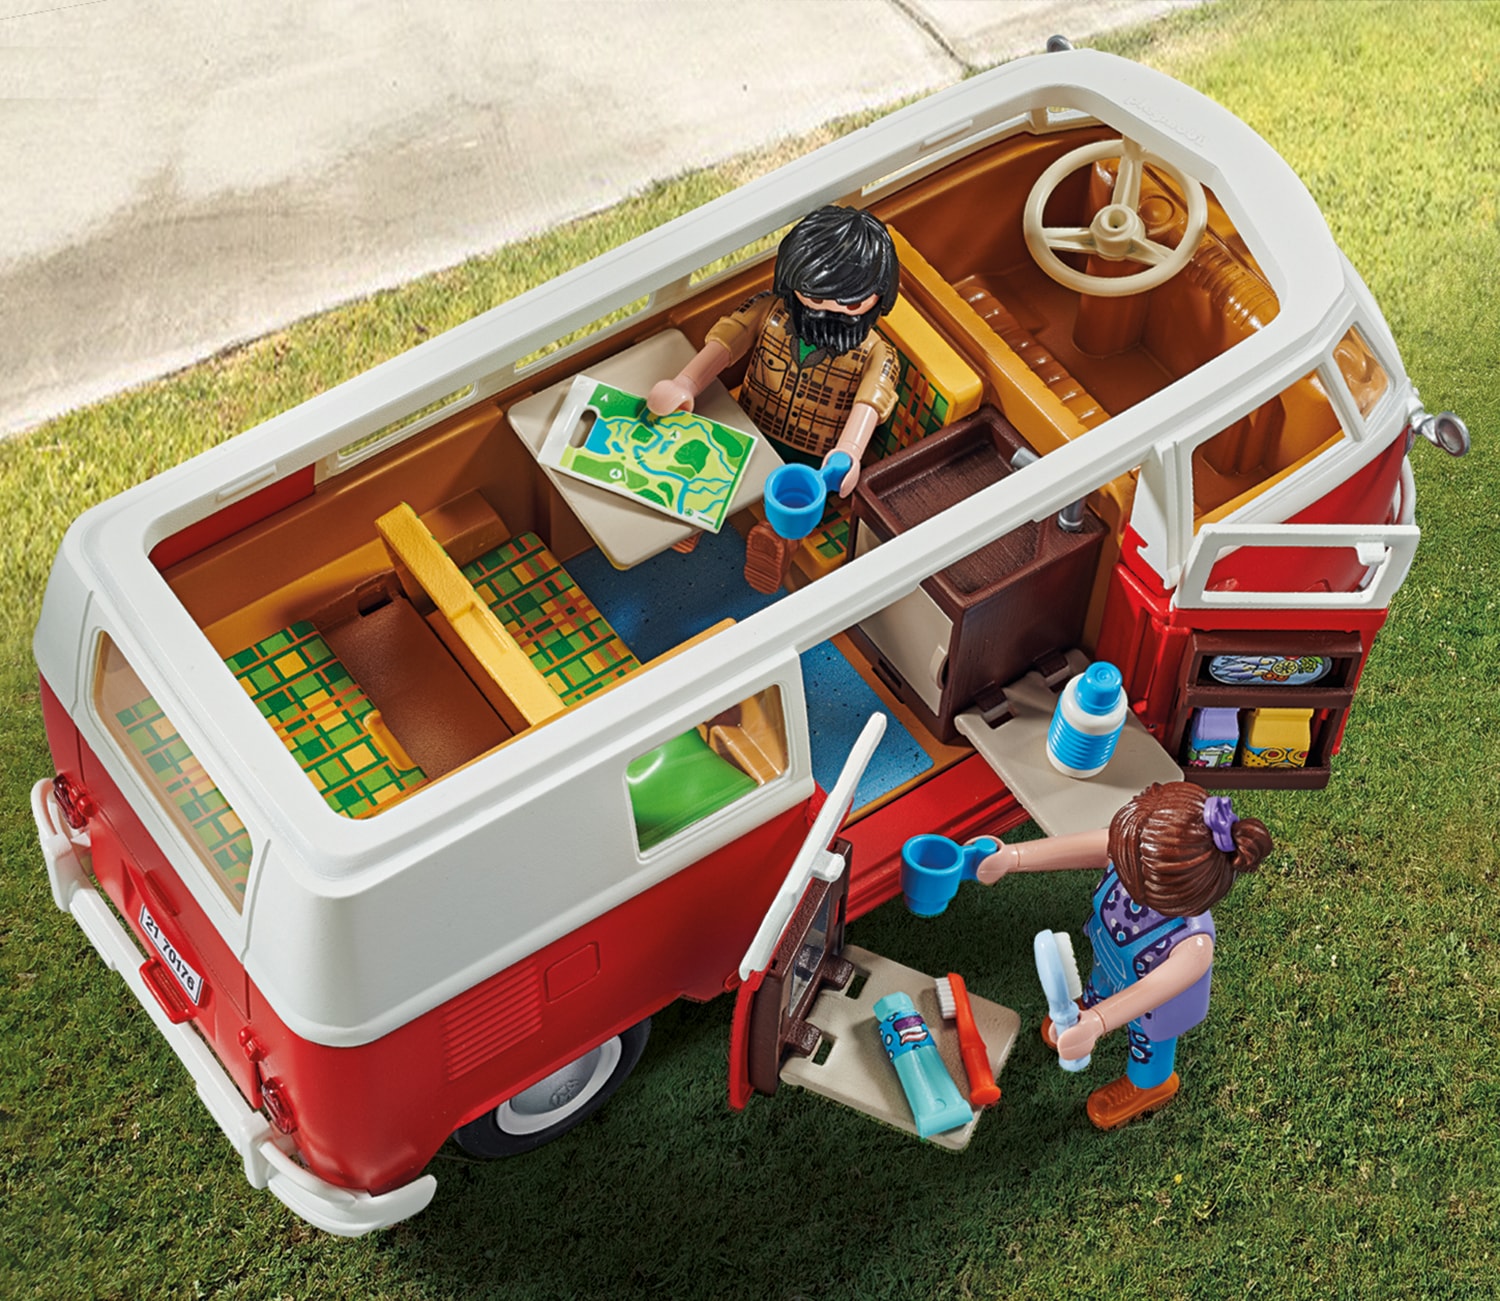 Playmobil® Konstruktions-Spielset »Volkswagen T1 Camping Bus (70176) VW Lizenz«, (74 St.)